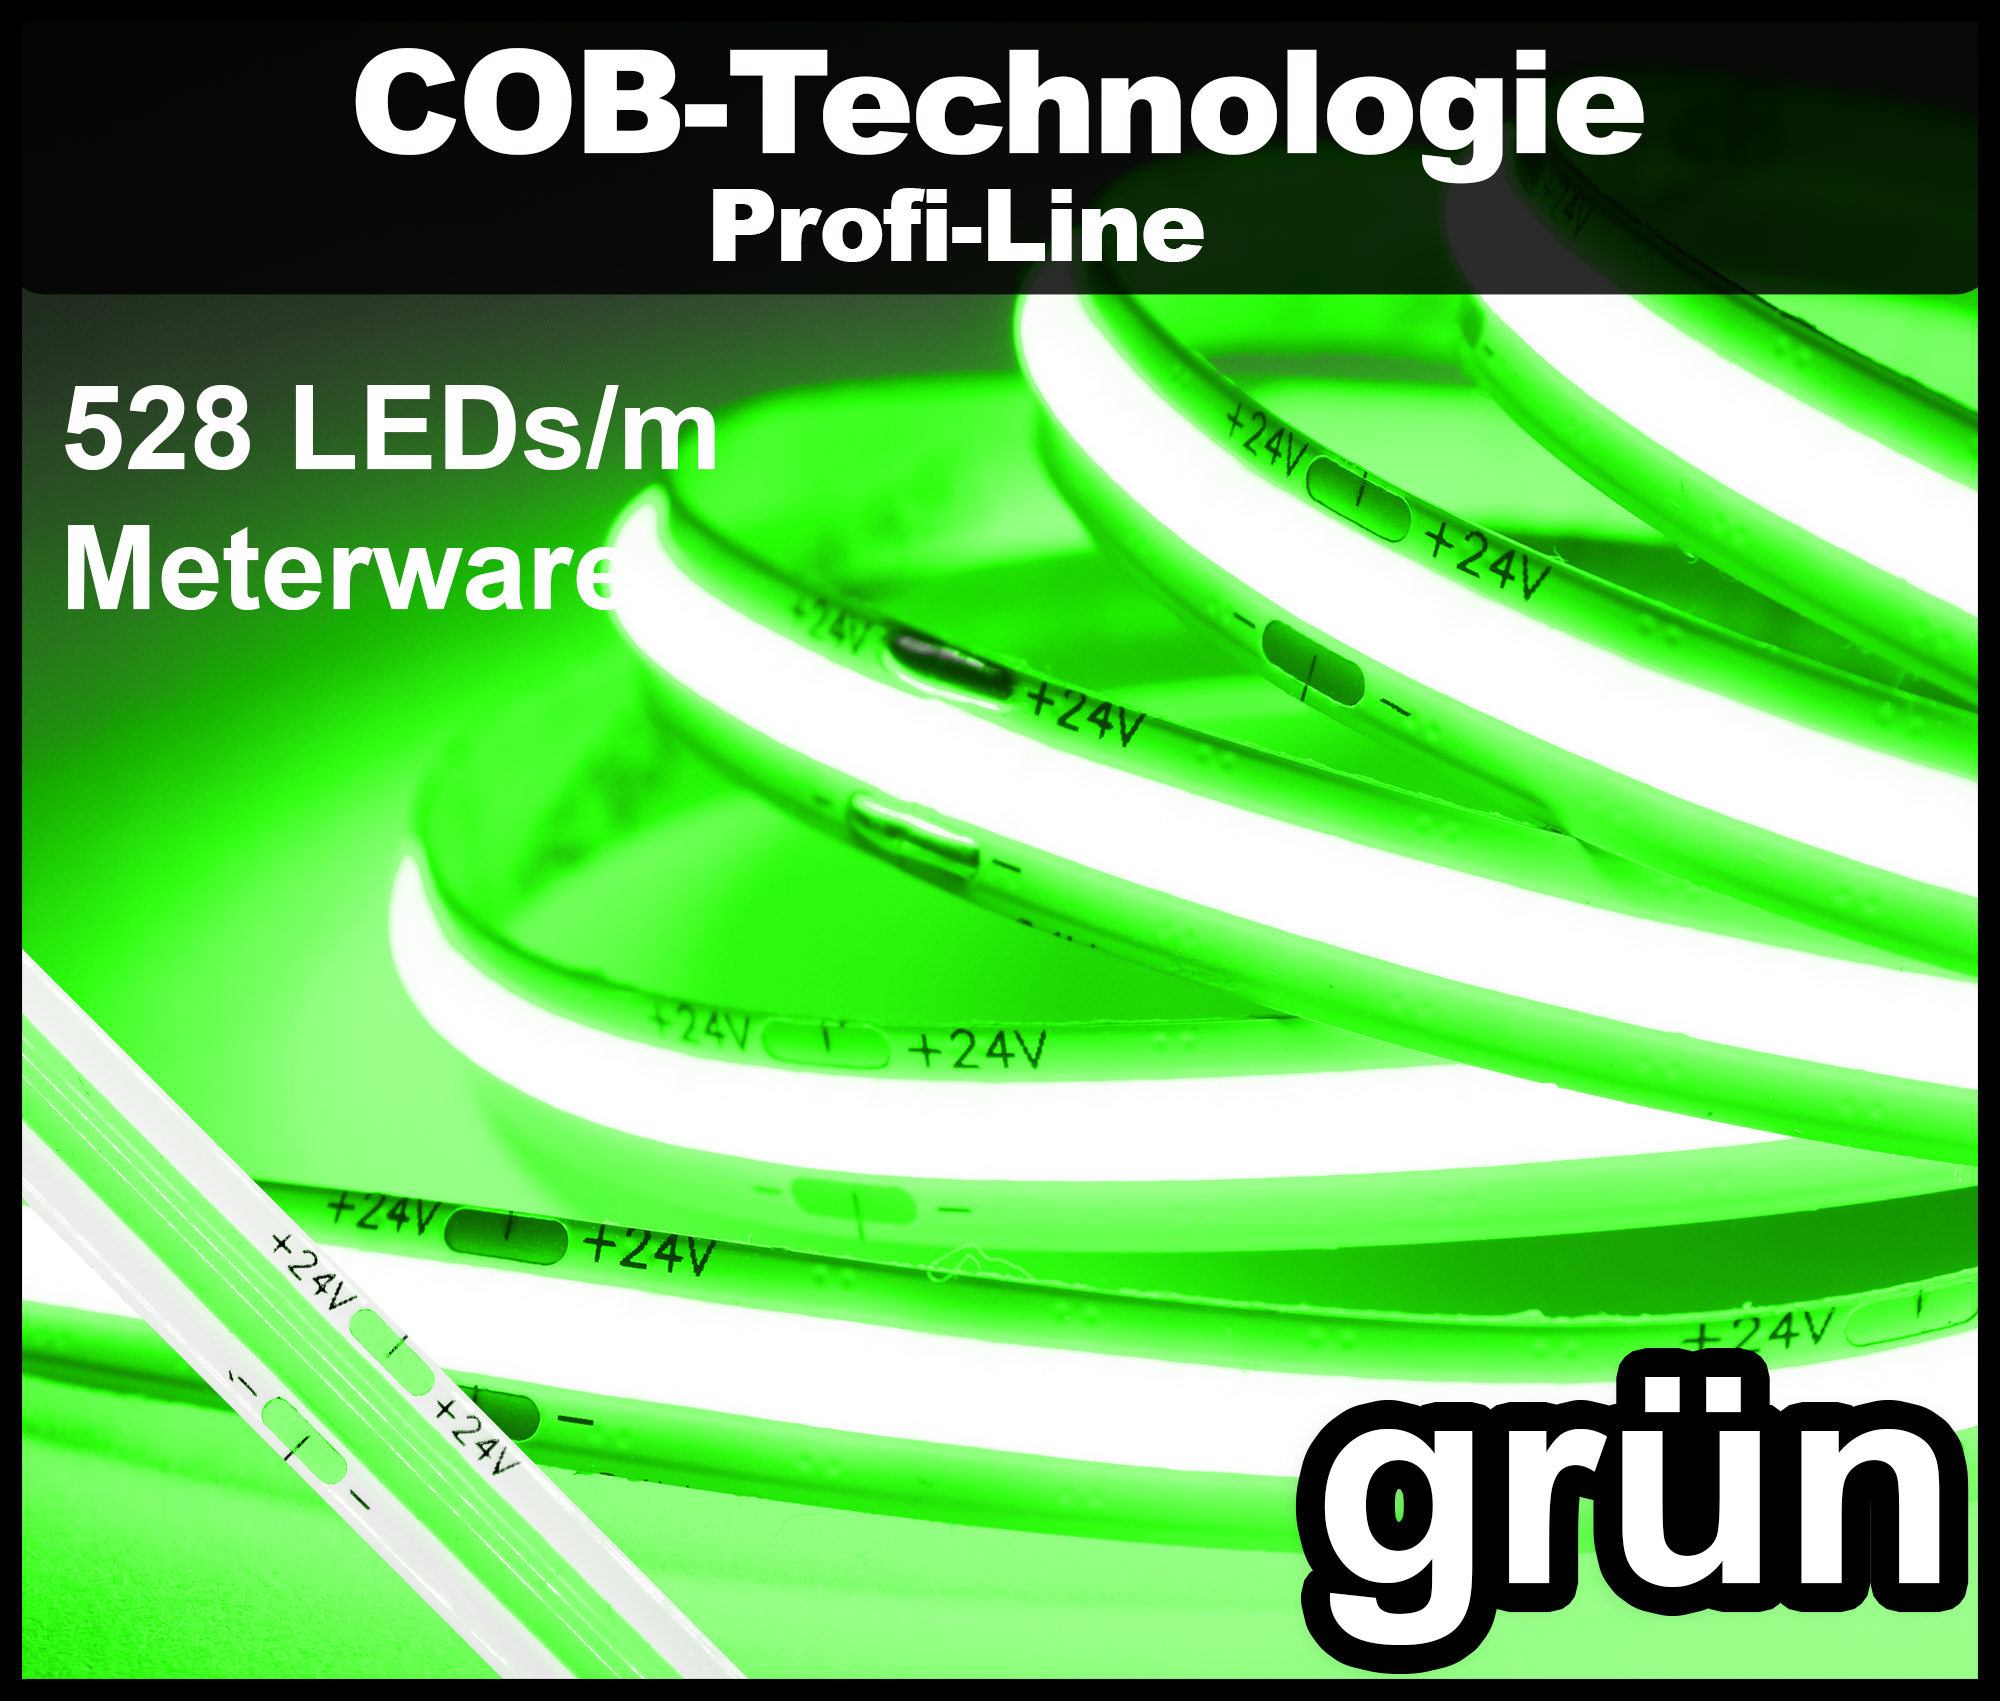 1m COB LED Strip PL 528 NEON-like 24V, GRÜN, 980 lm/m bei 14W/m,  einfarbiger LED Streifen Flexband IP20, COB LED-Strips, Einfarbige  LED-Strips, LED-STRIPS